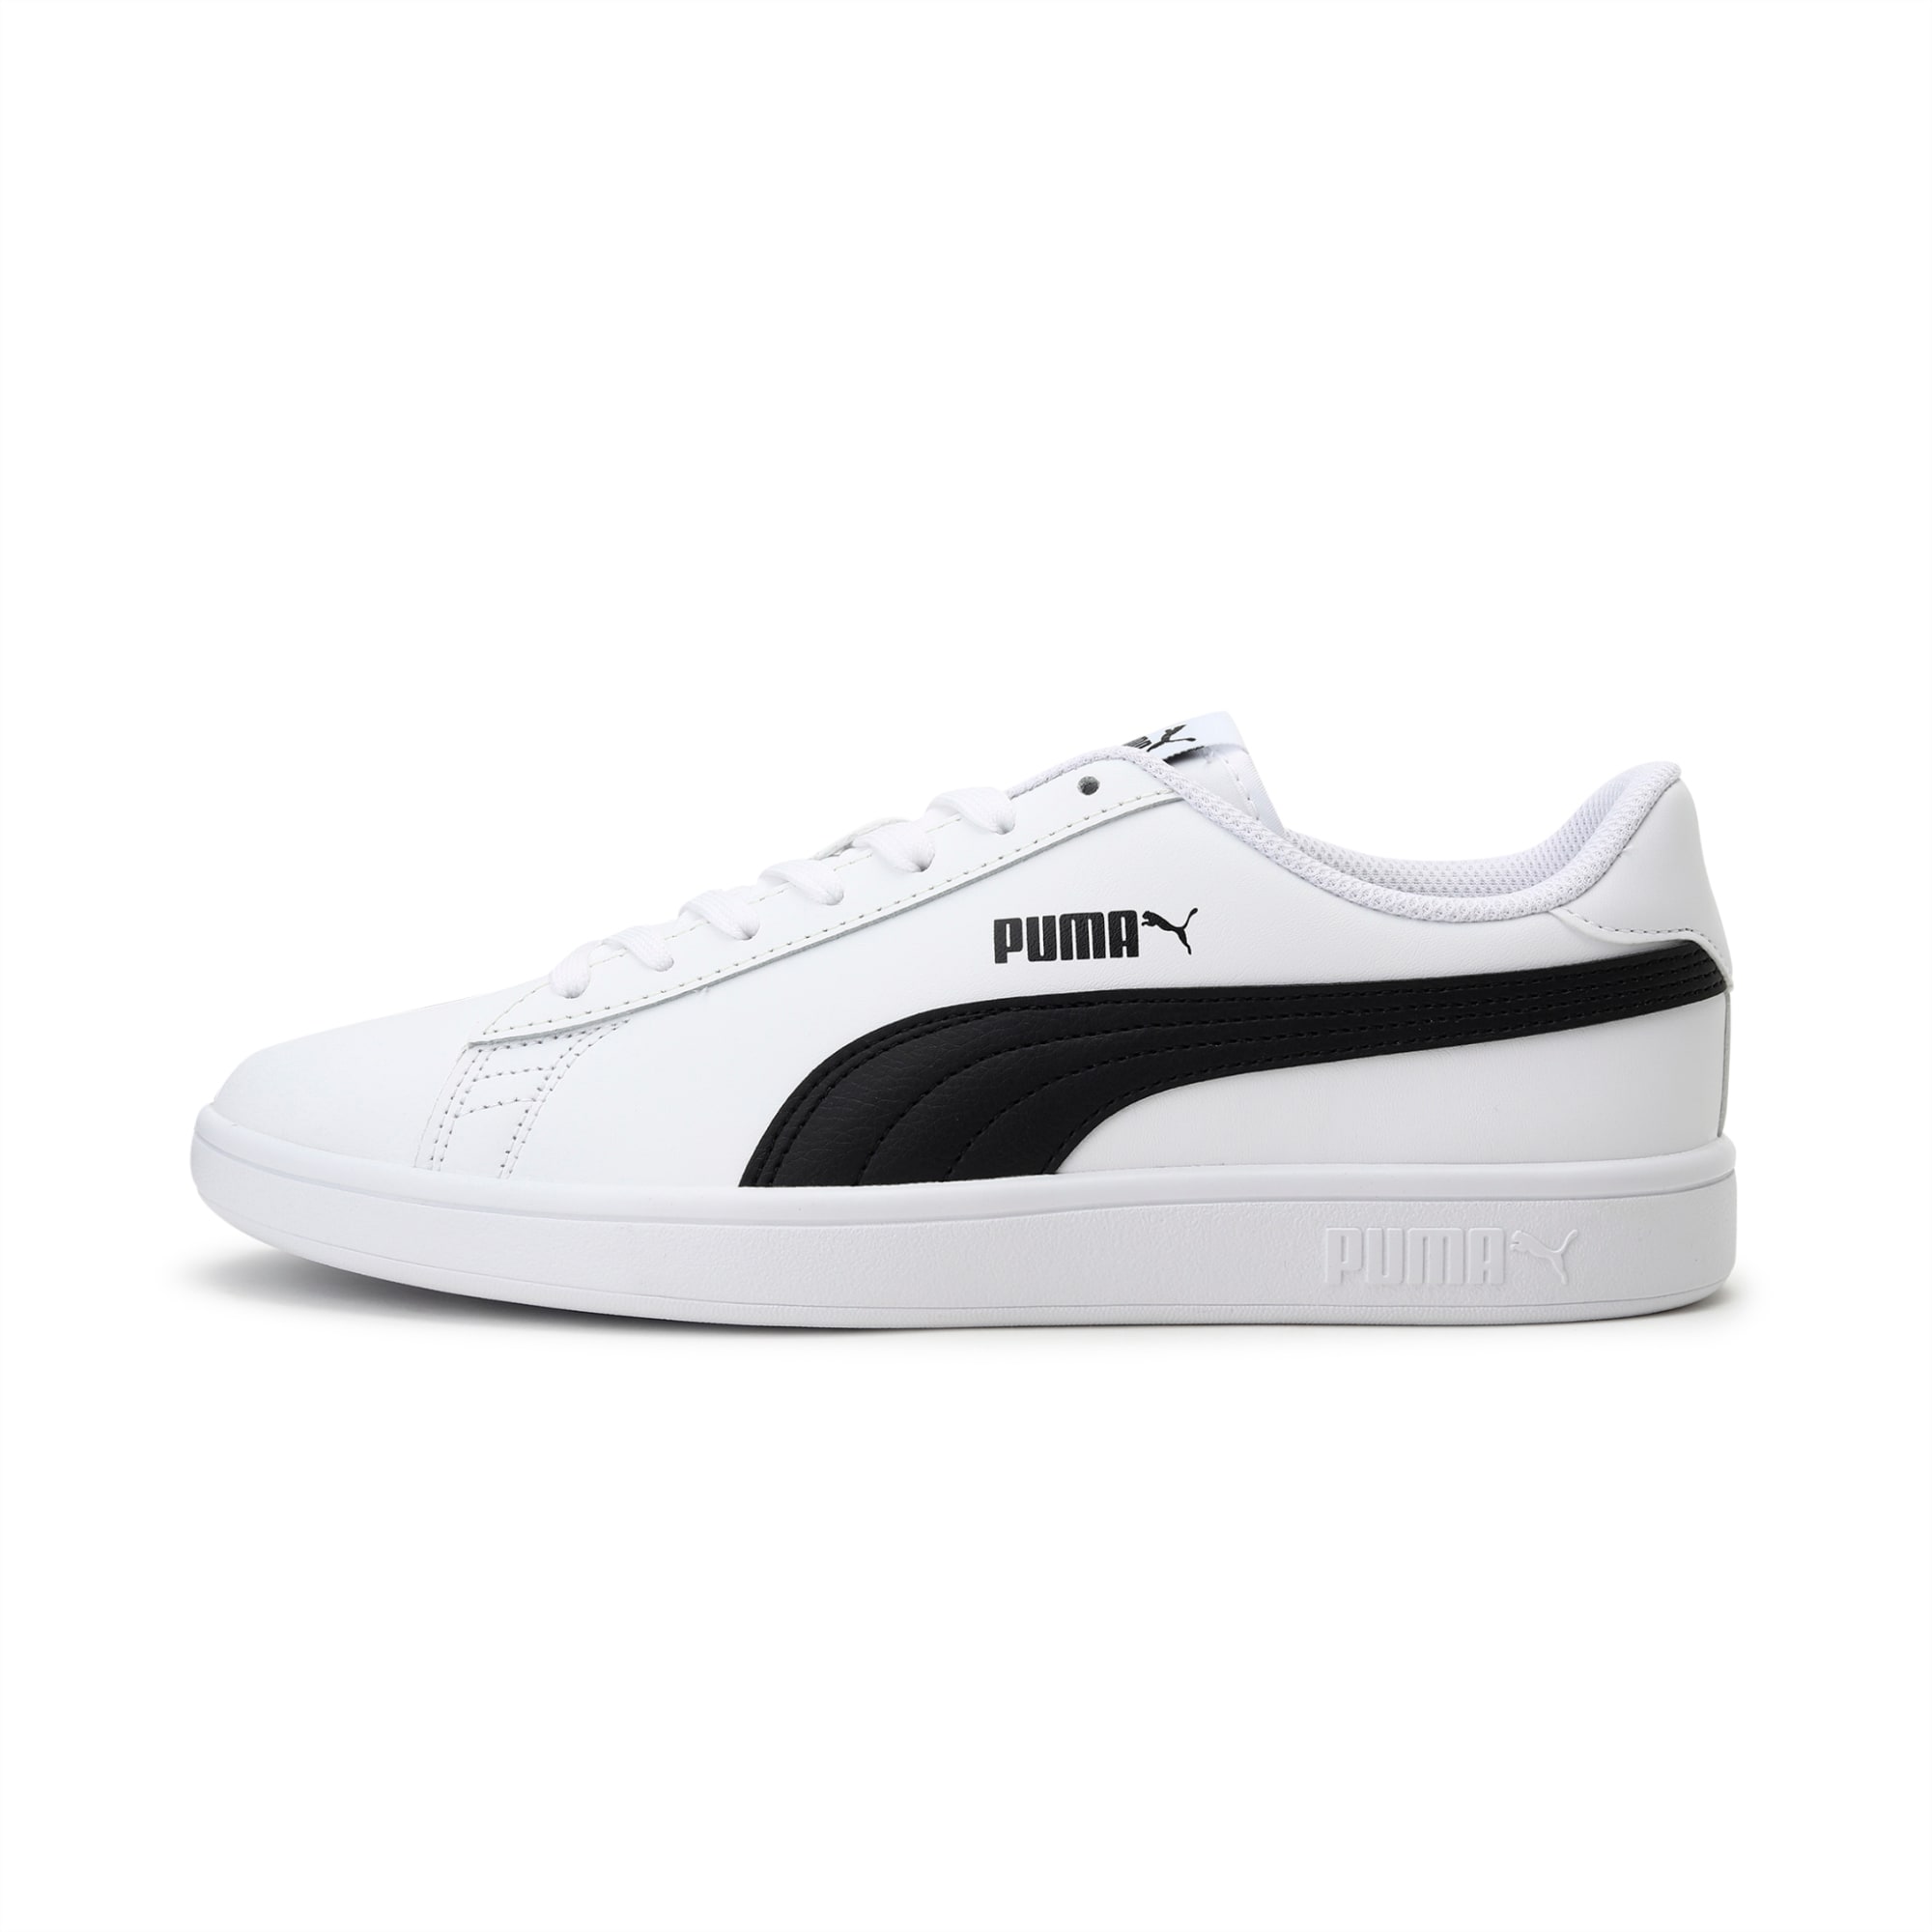 puma latest white shoes